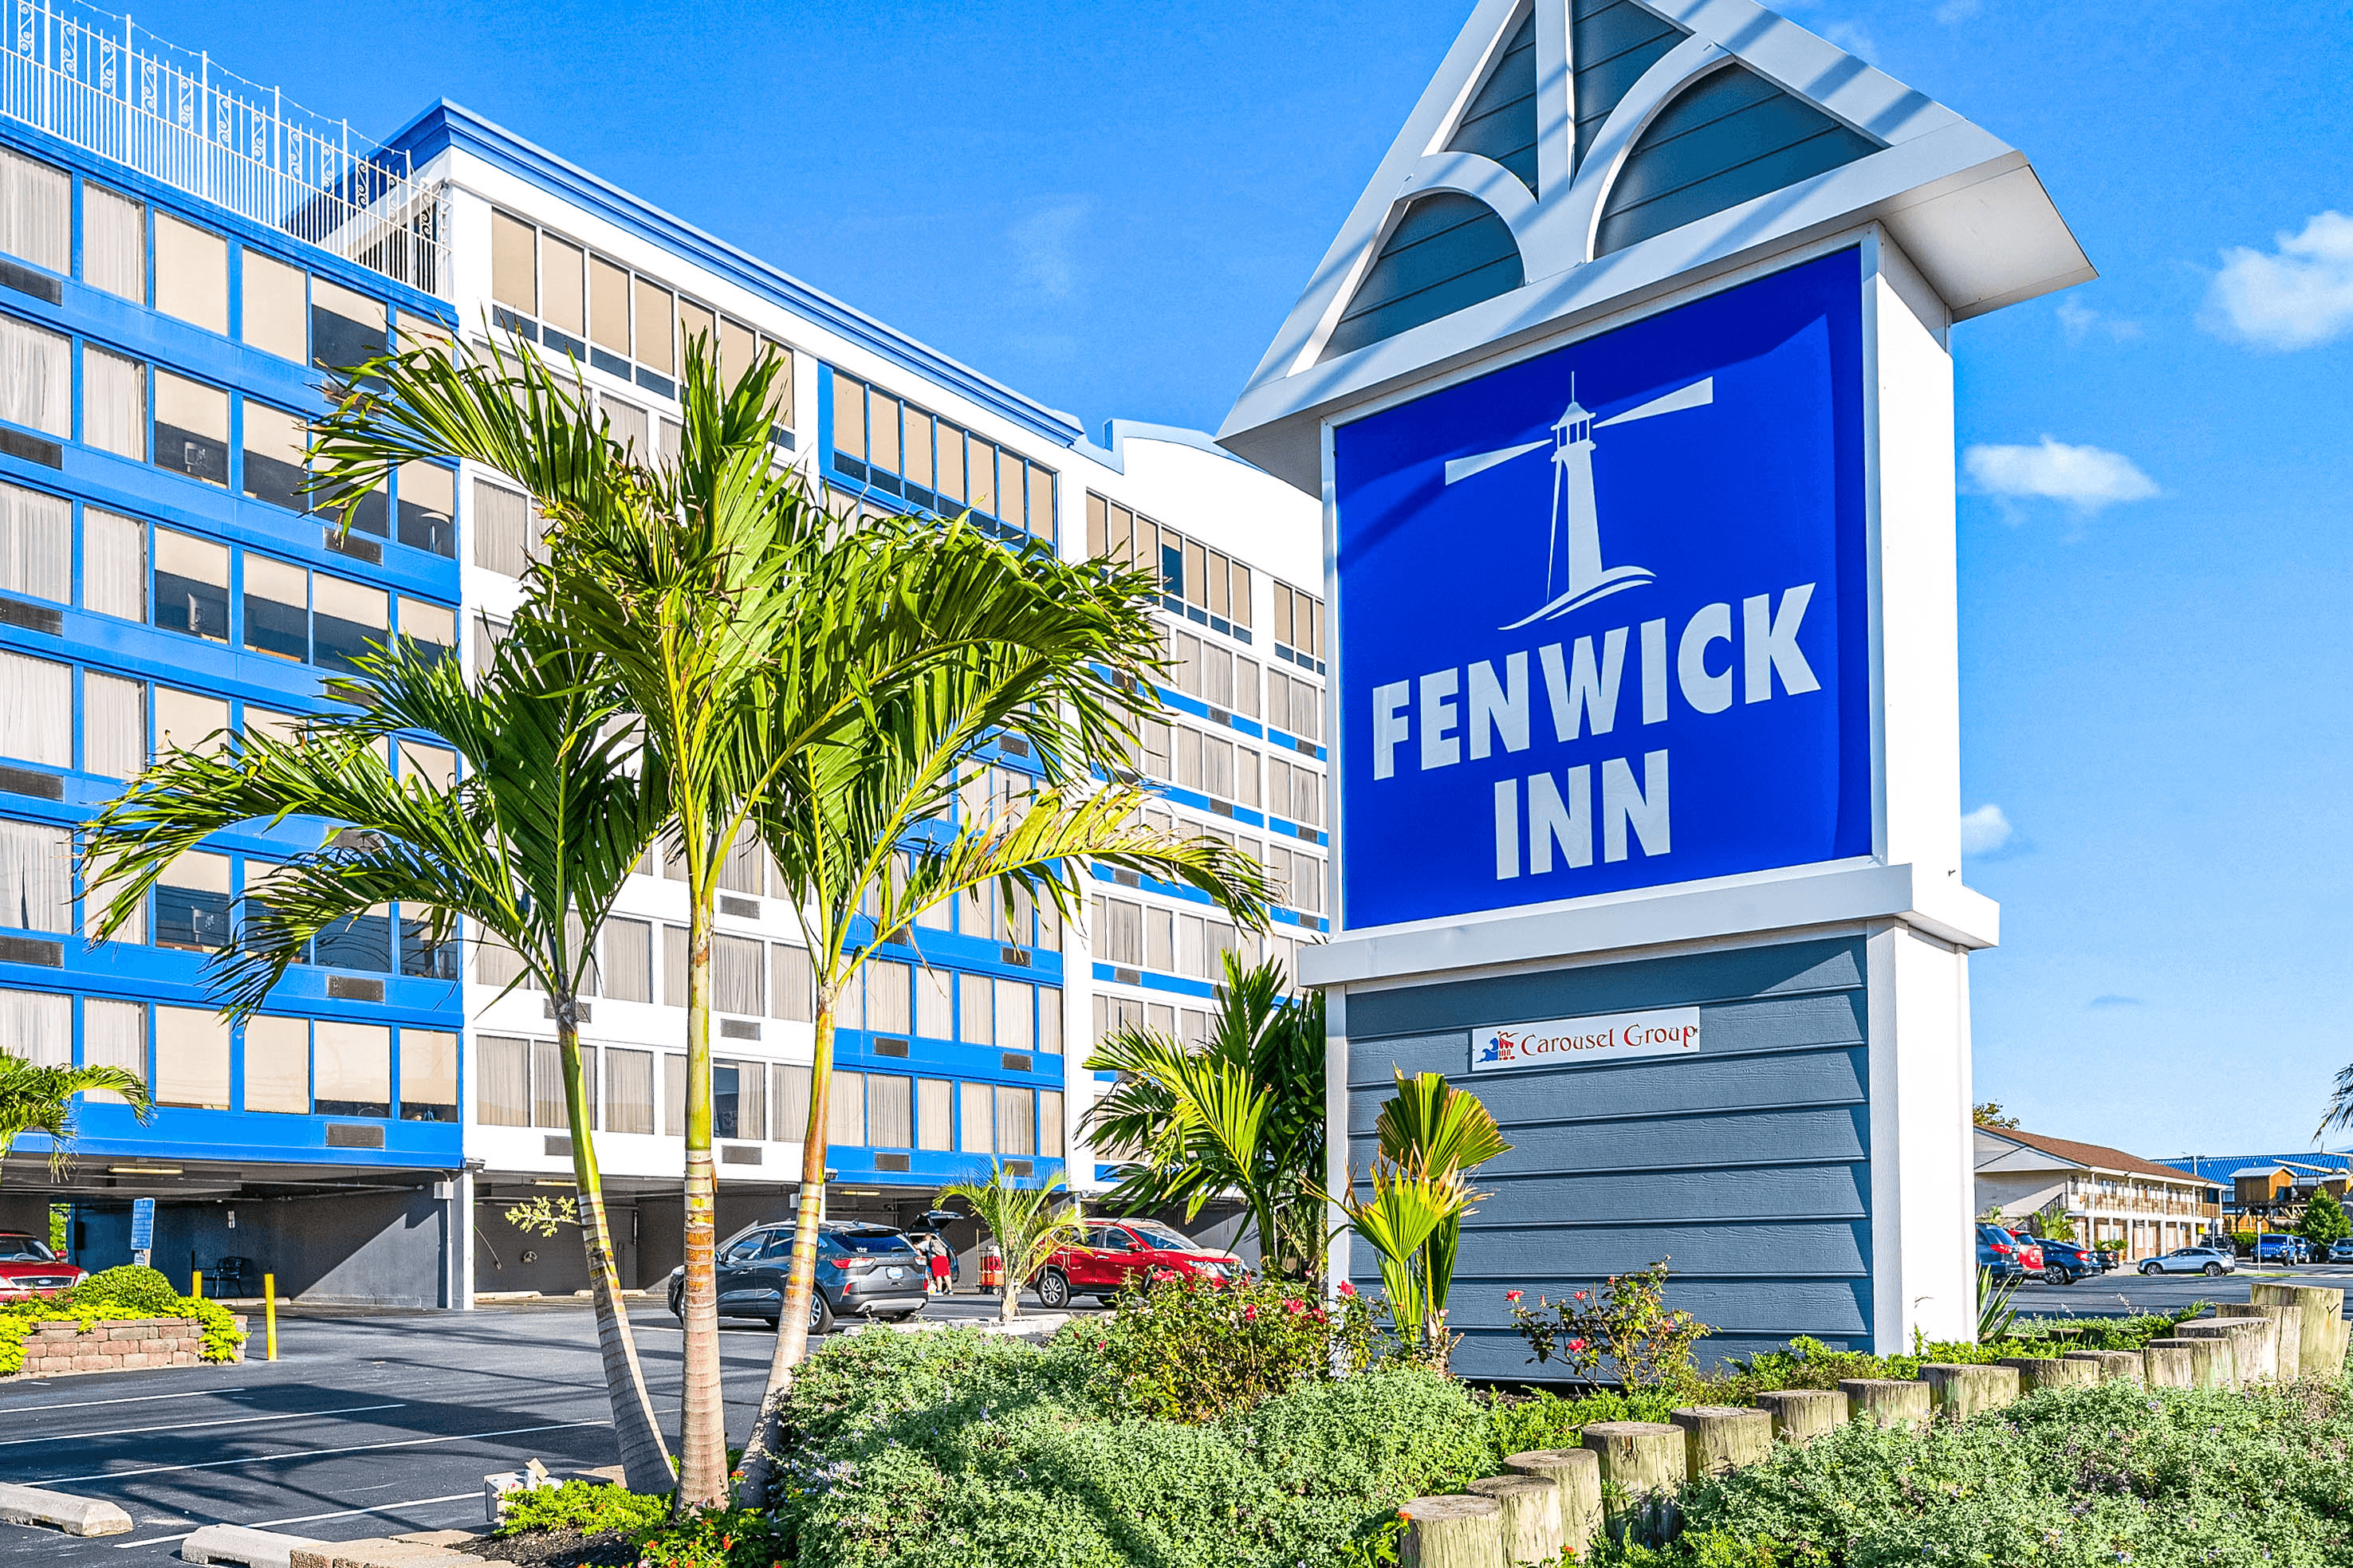 Photos, Fenwick Inn, Ocean City MD